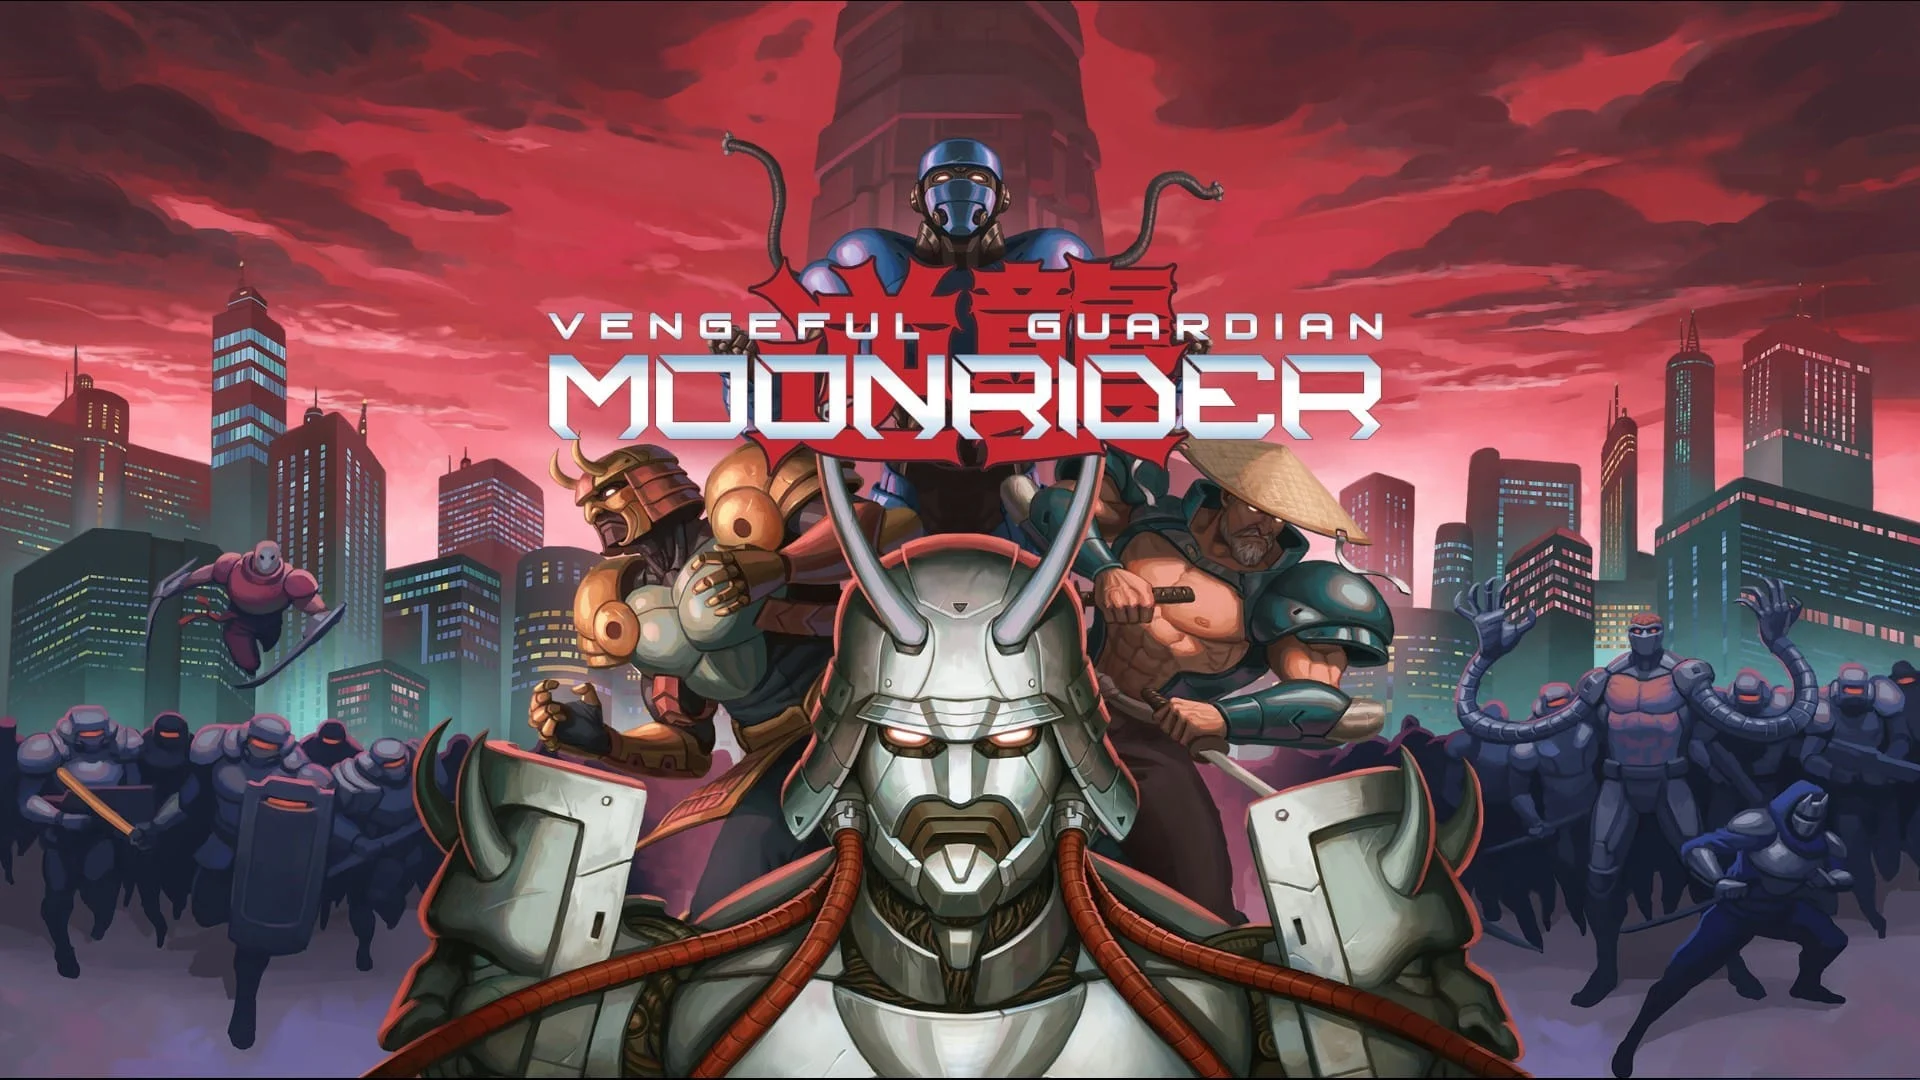 Vengeful: Guardian Moonrider, Official Release Date Reveal Trailer